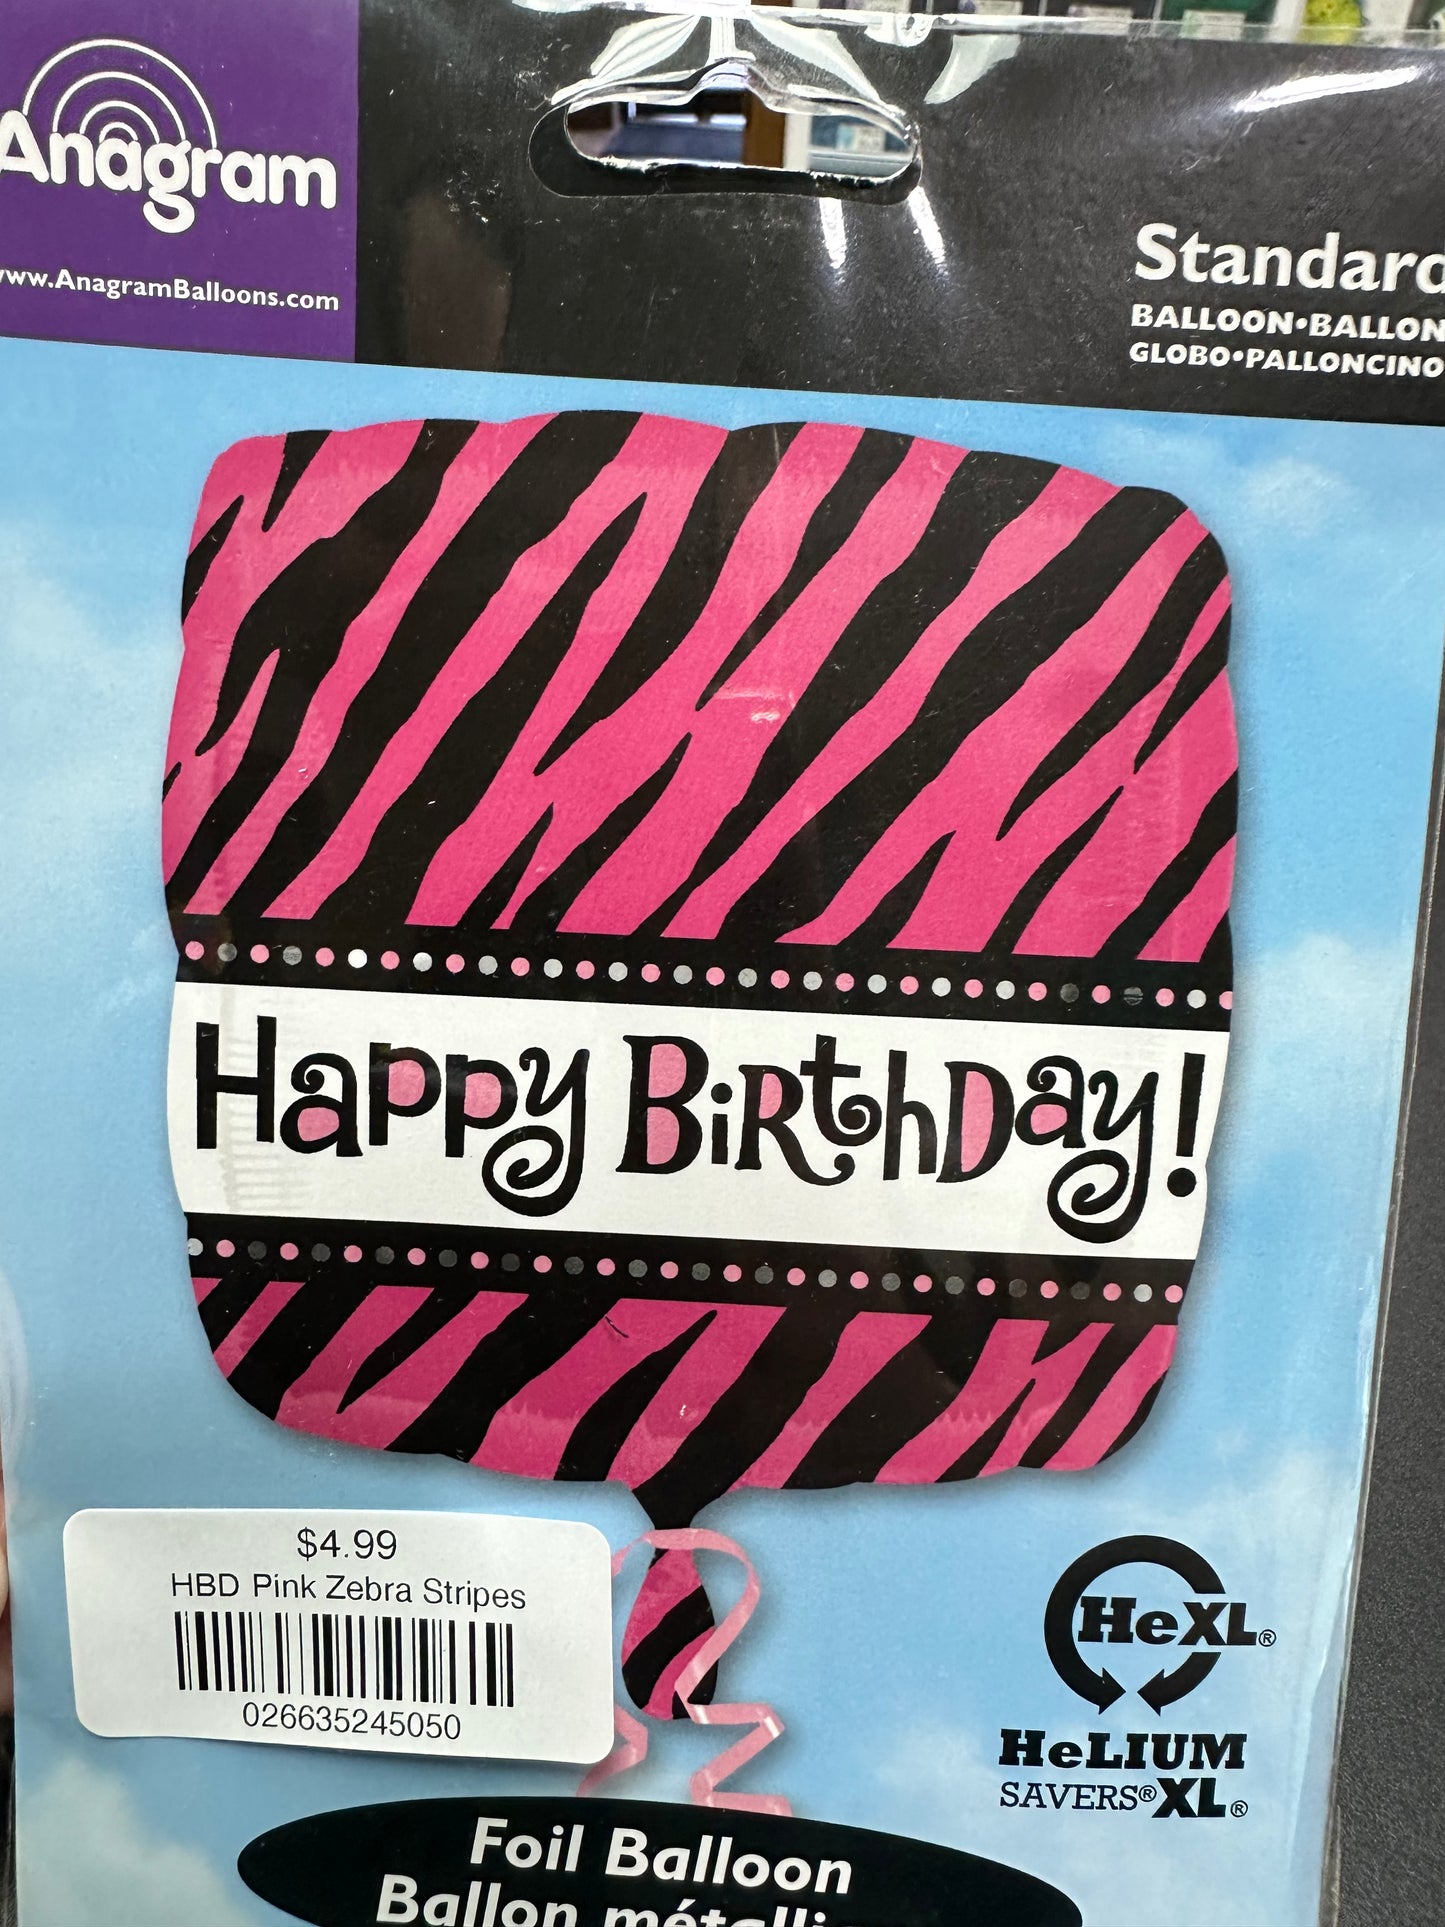 HBD Pink Zebra Stripes